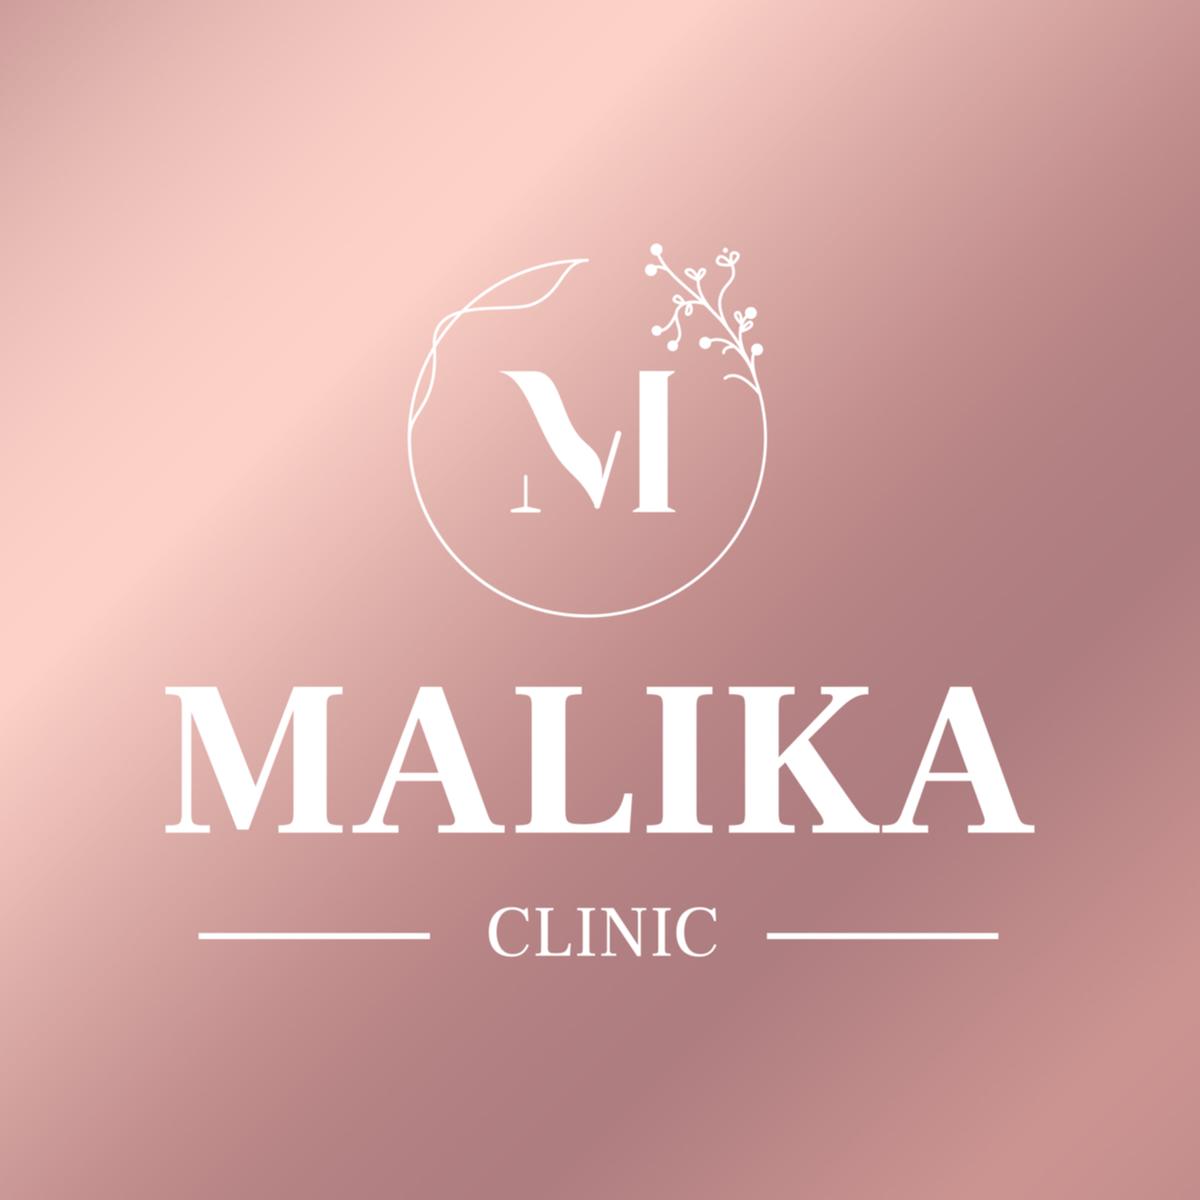 Malika Clinic